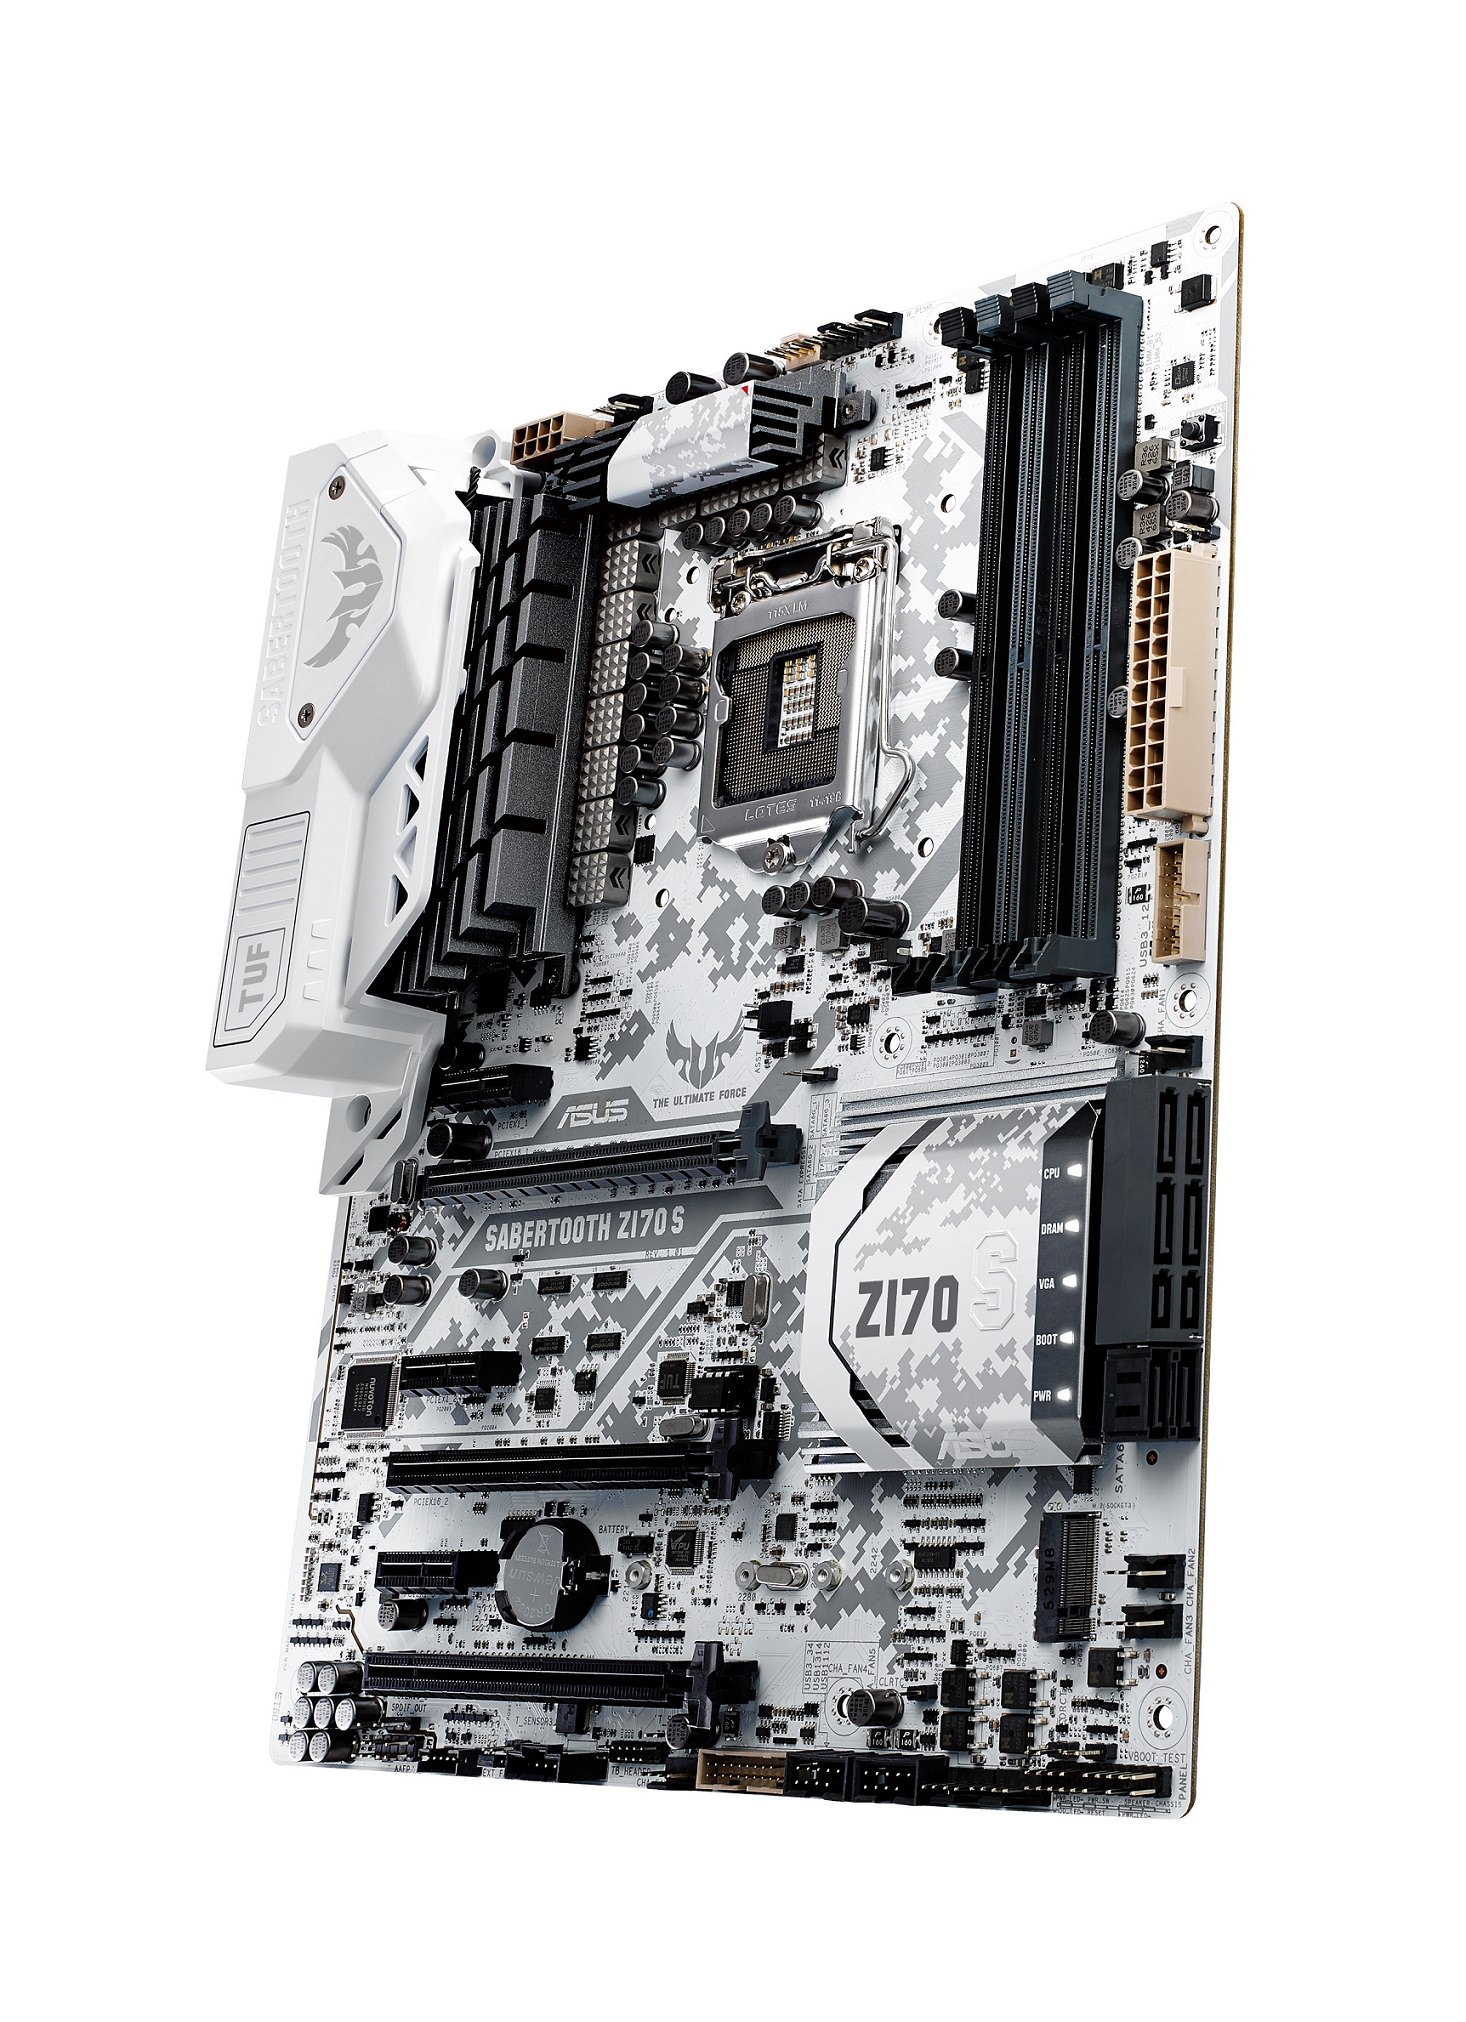 TUF Sabertooth Z170 S搭載Intel Z170 Express晶片組，可淋漓釋放第六代Intel Core處理器極致效能，並支援第二代USB 3.1 AC型連接埠，可提供疾速10Gbits資料傳輸！